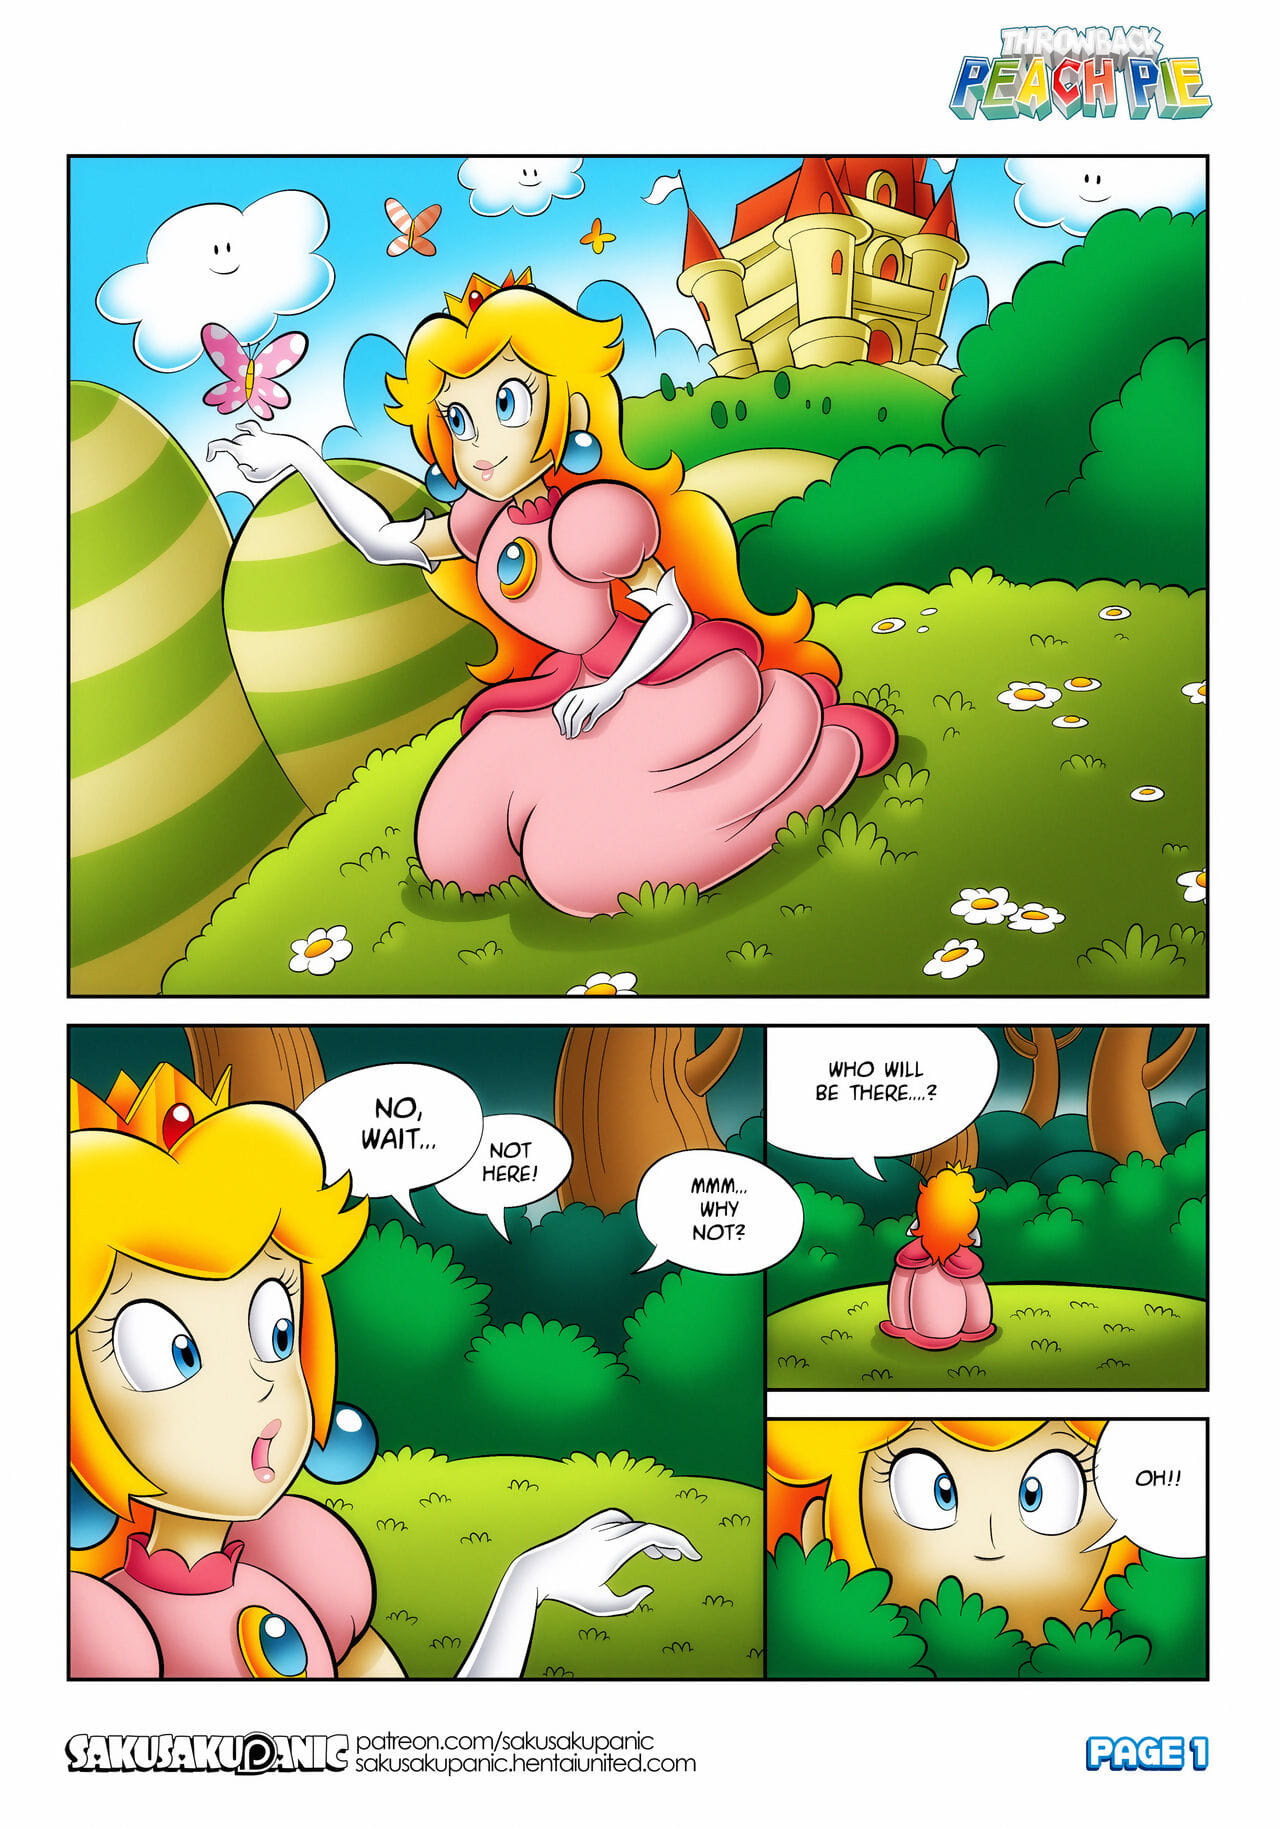 Throwback Peach Pie page 1